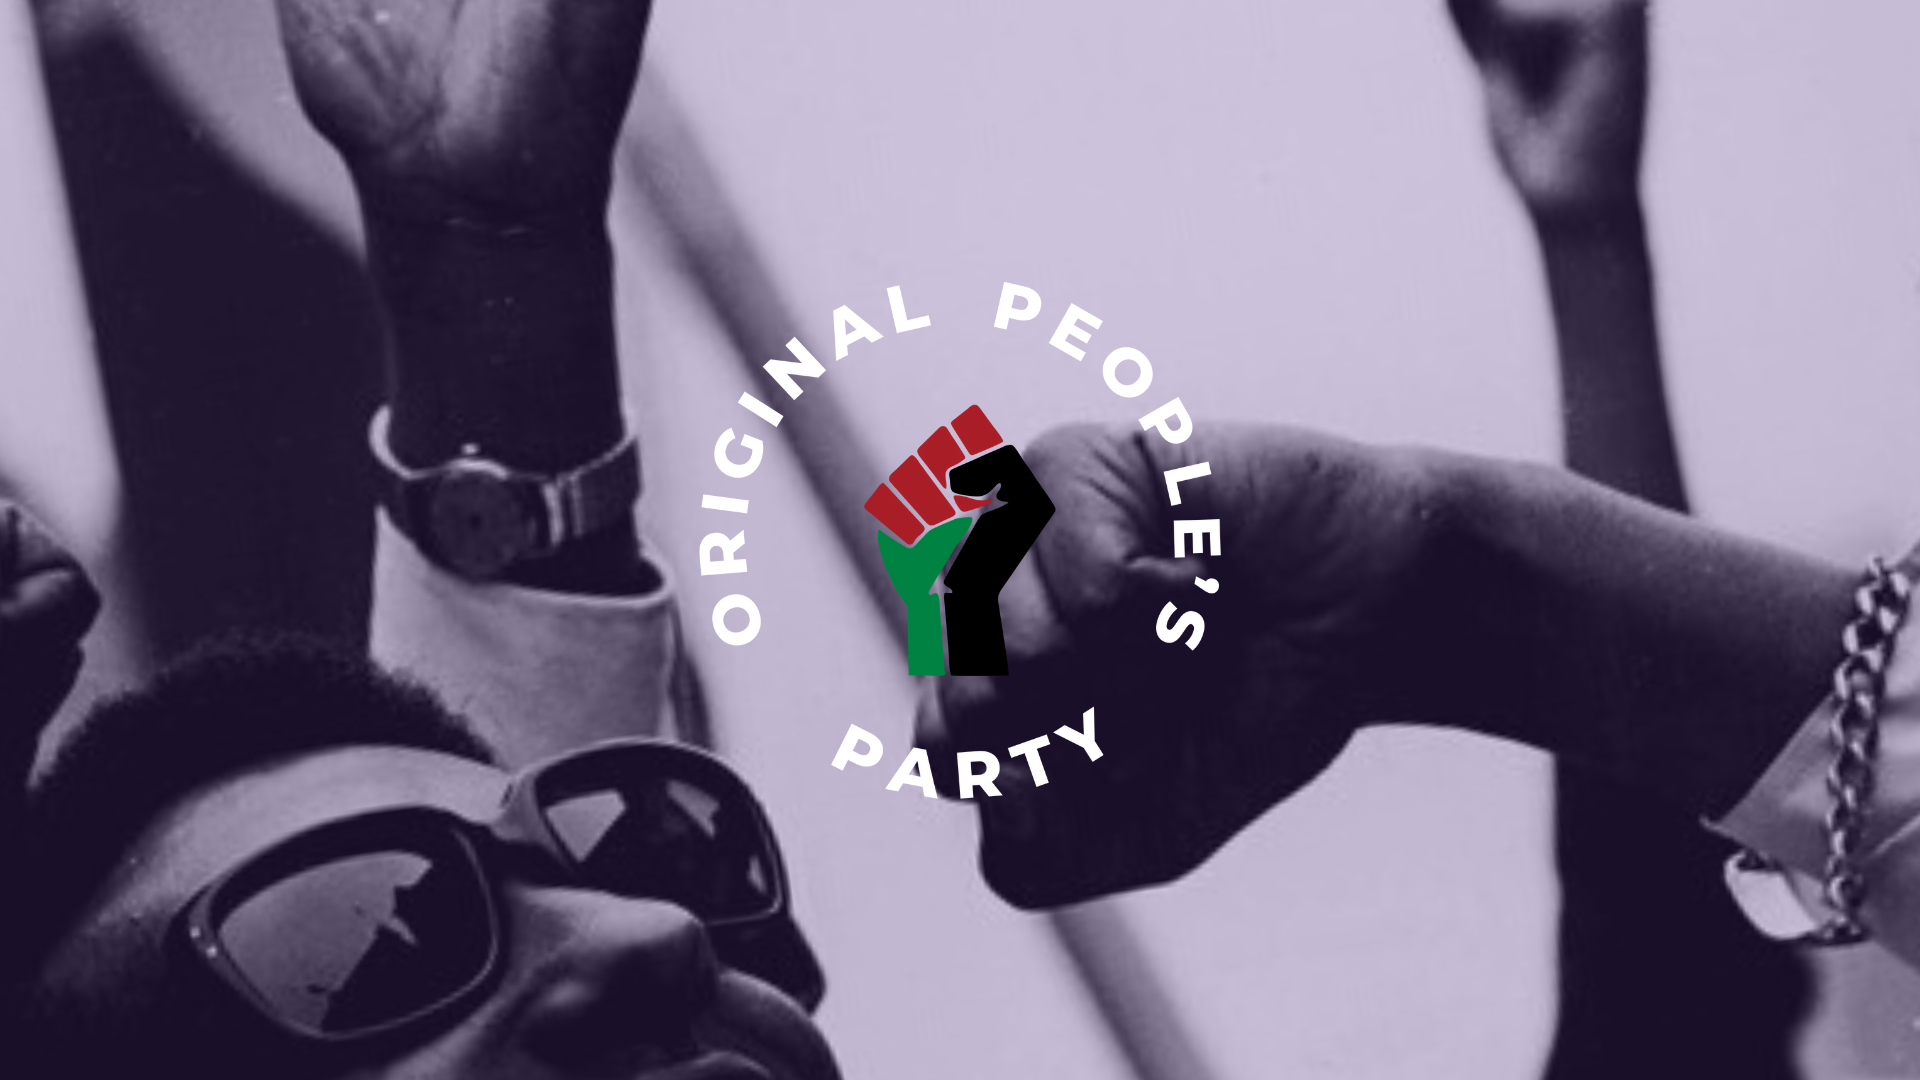 Original People's Party